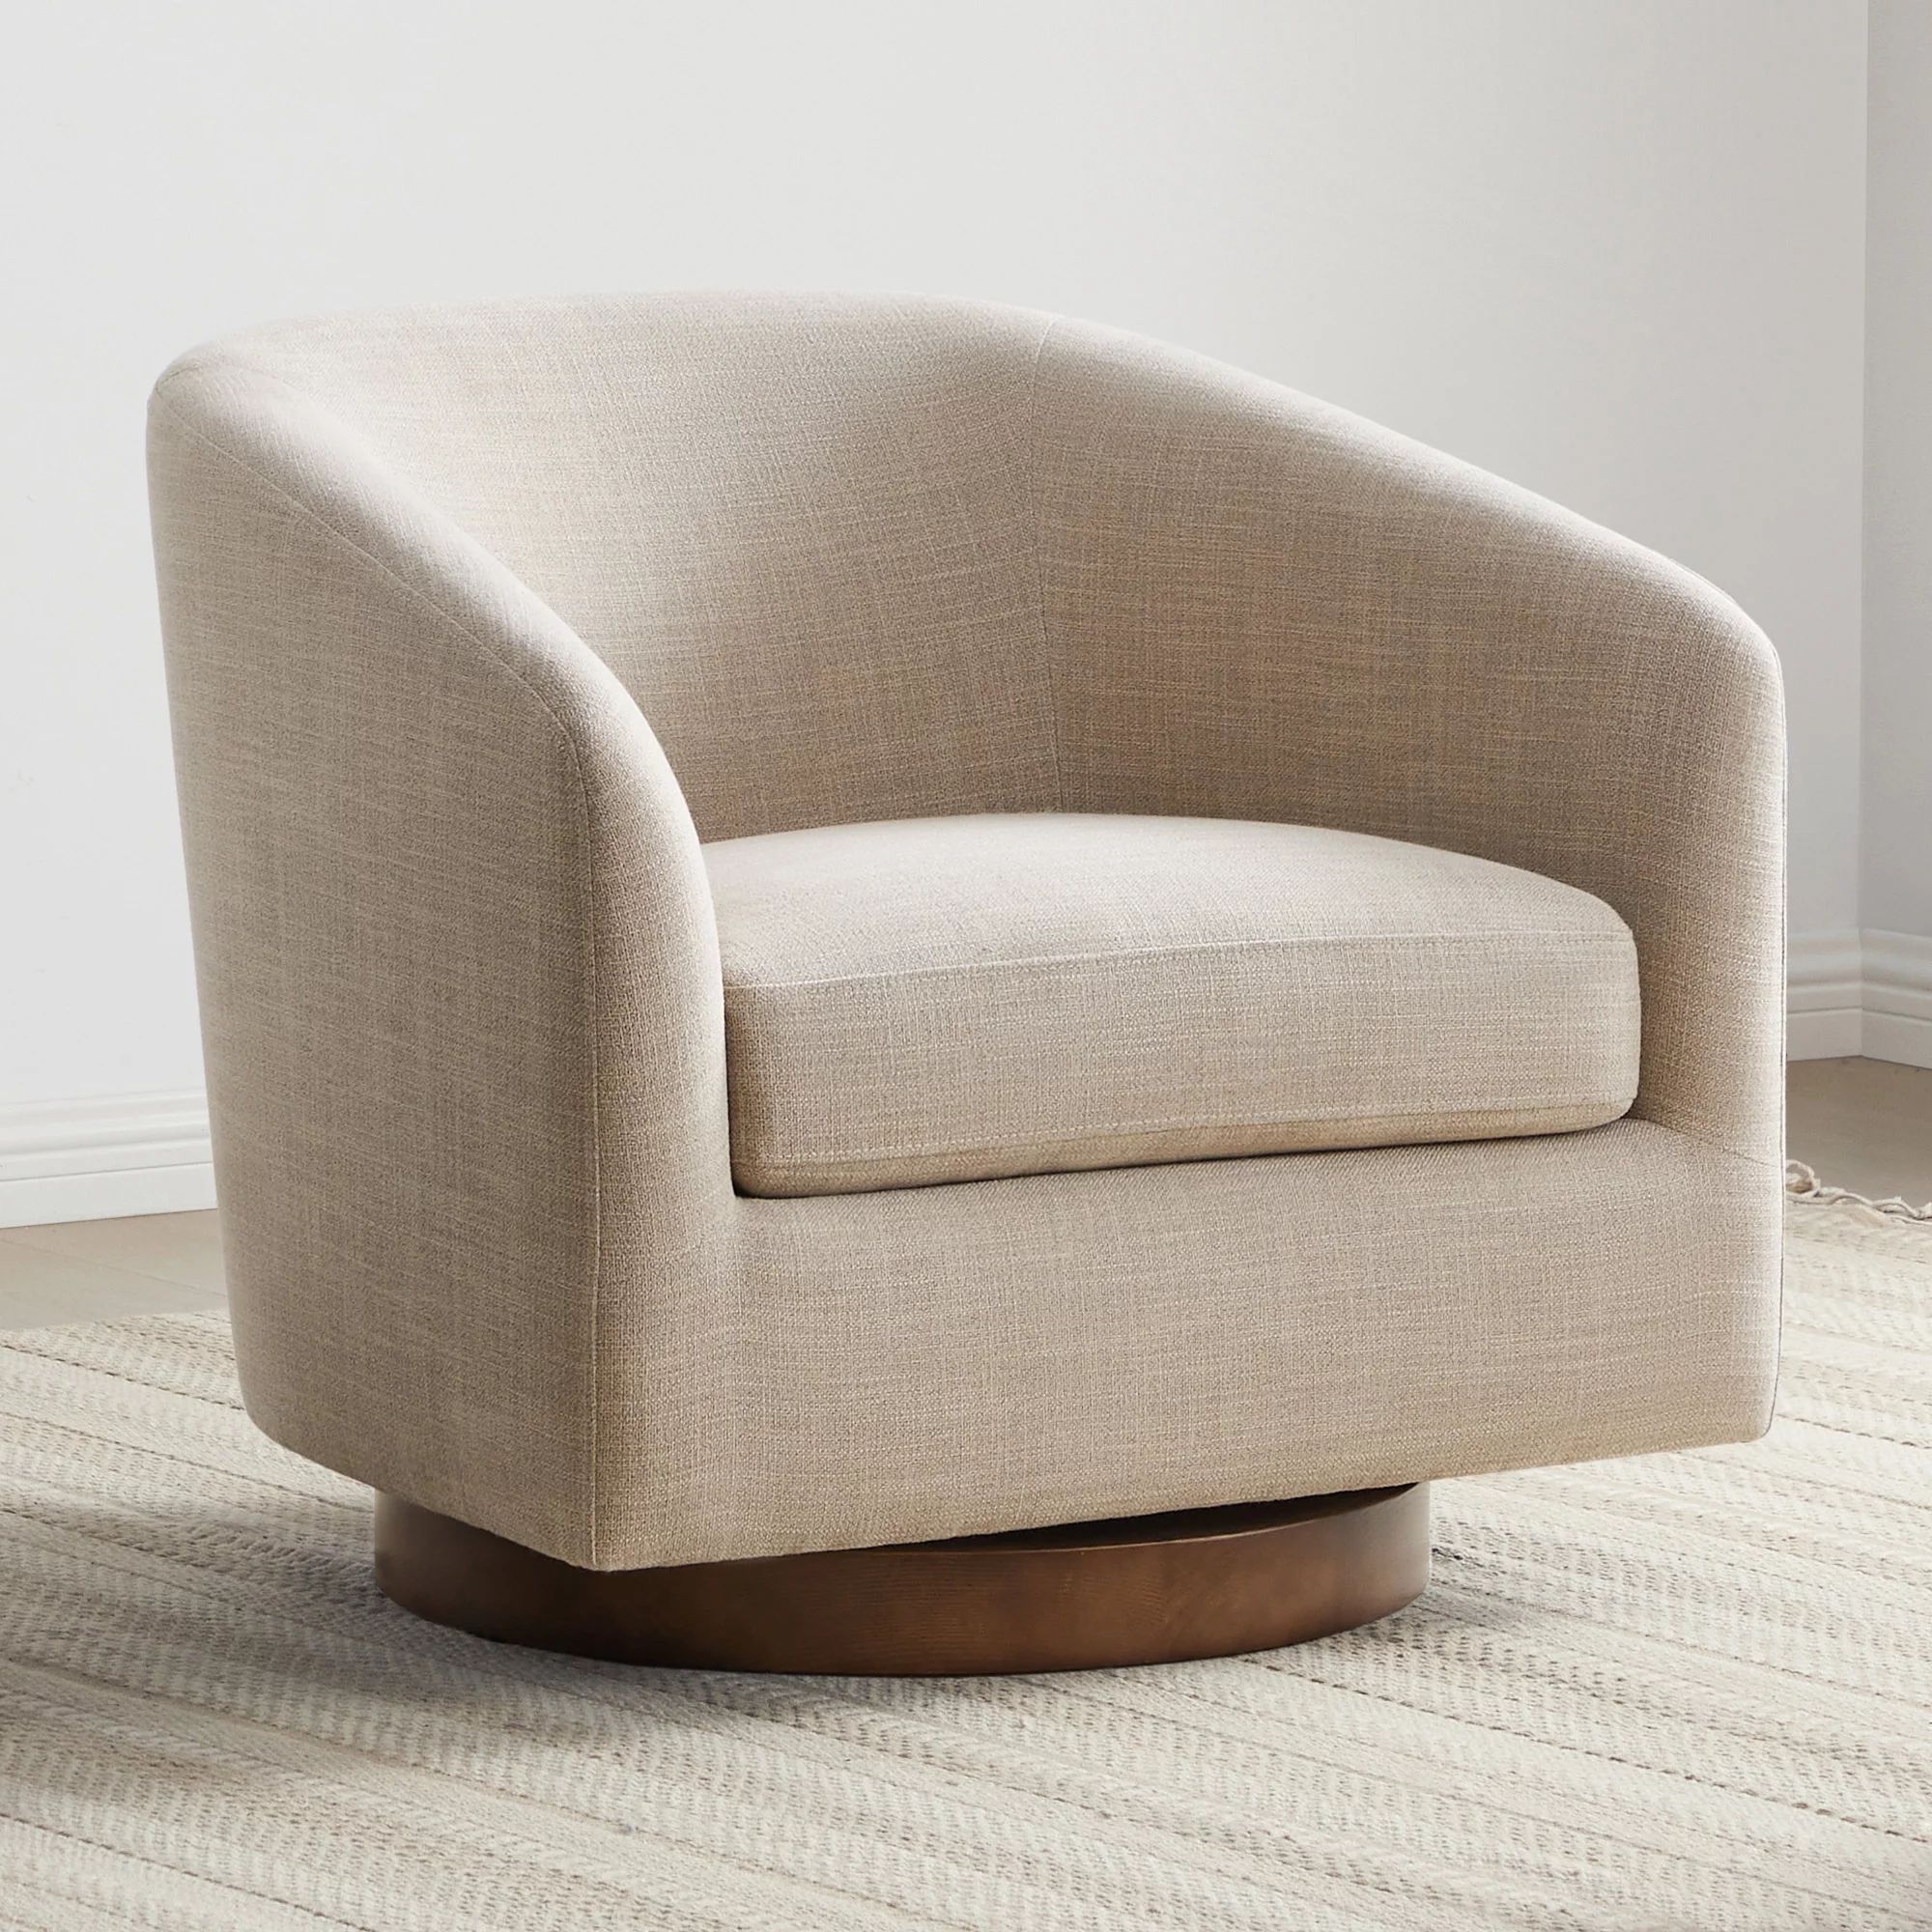 CHITA Swivel Accent Chair Fabric, Round Barrel Arm Chair Living Room, Flax Beige | Walmart (US)